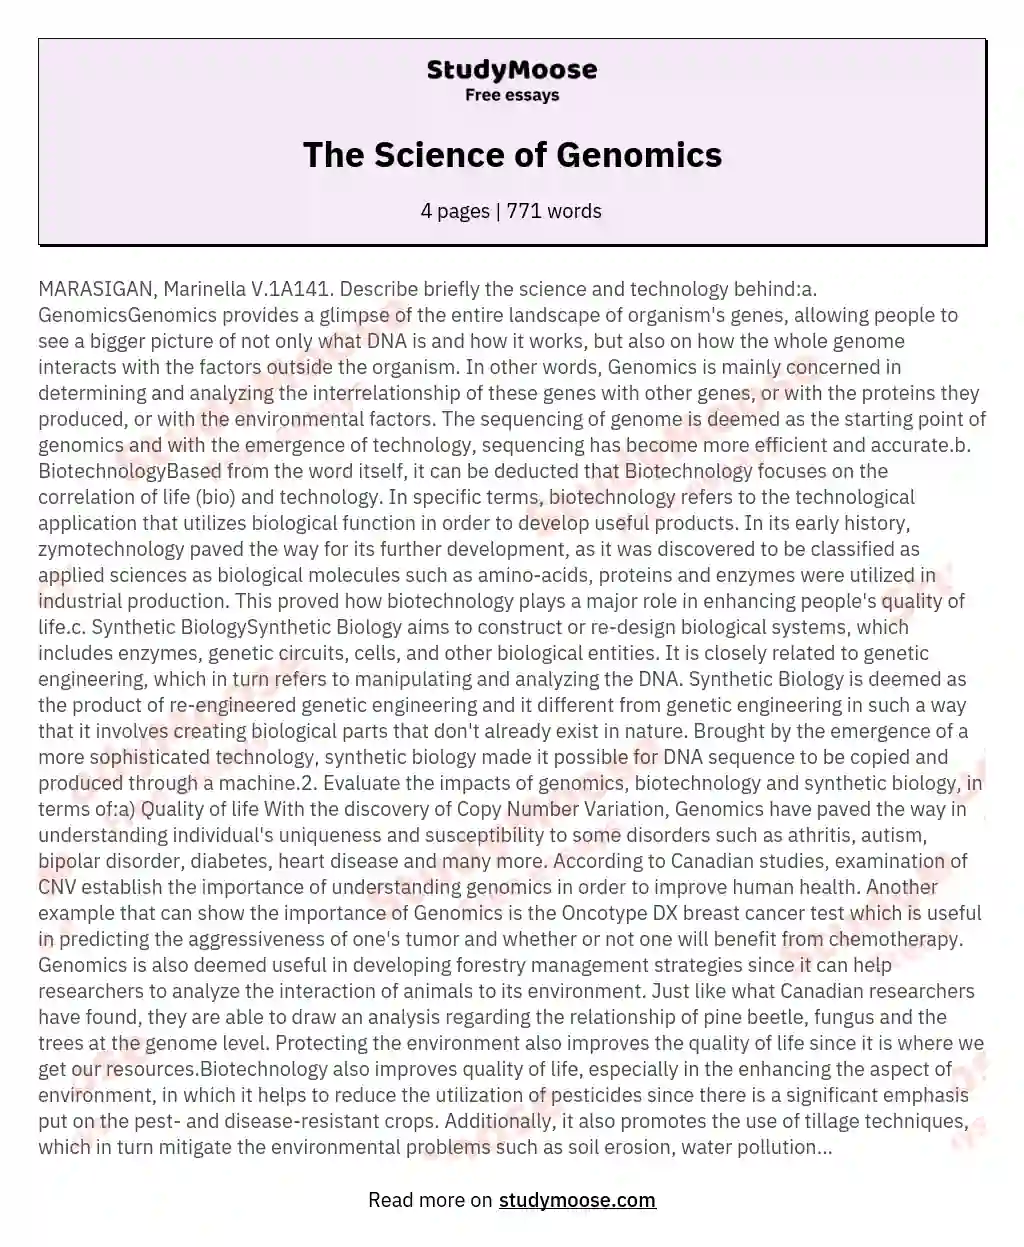 The Science of Genomics essay